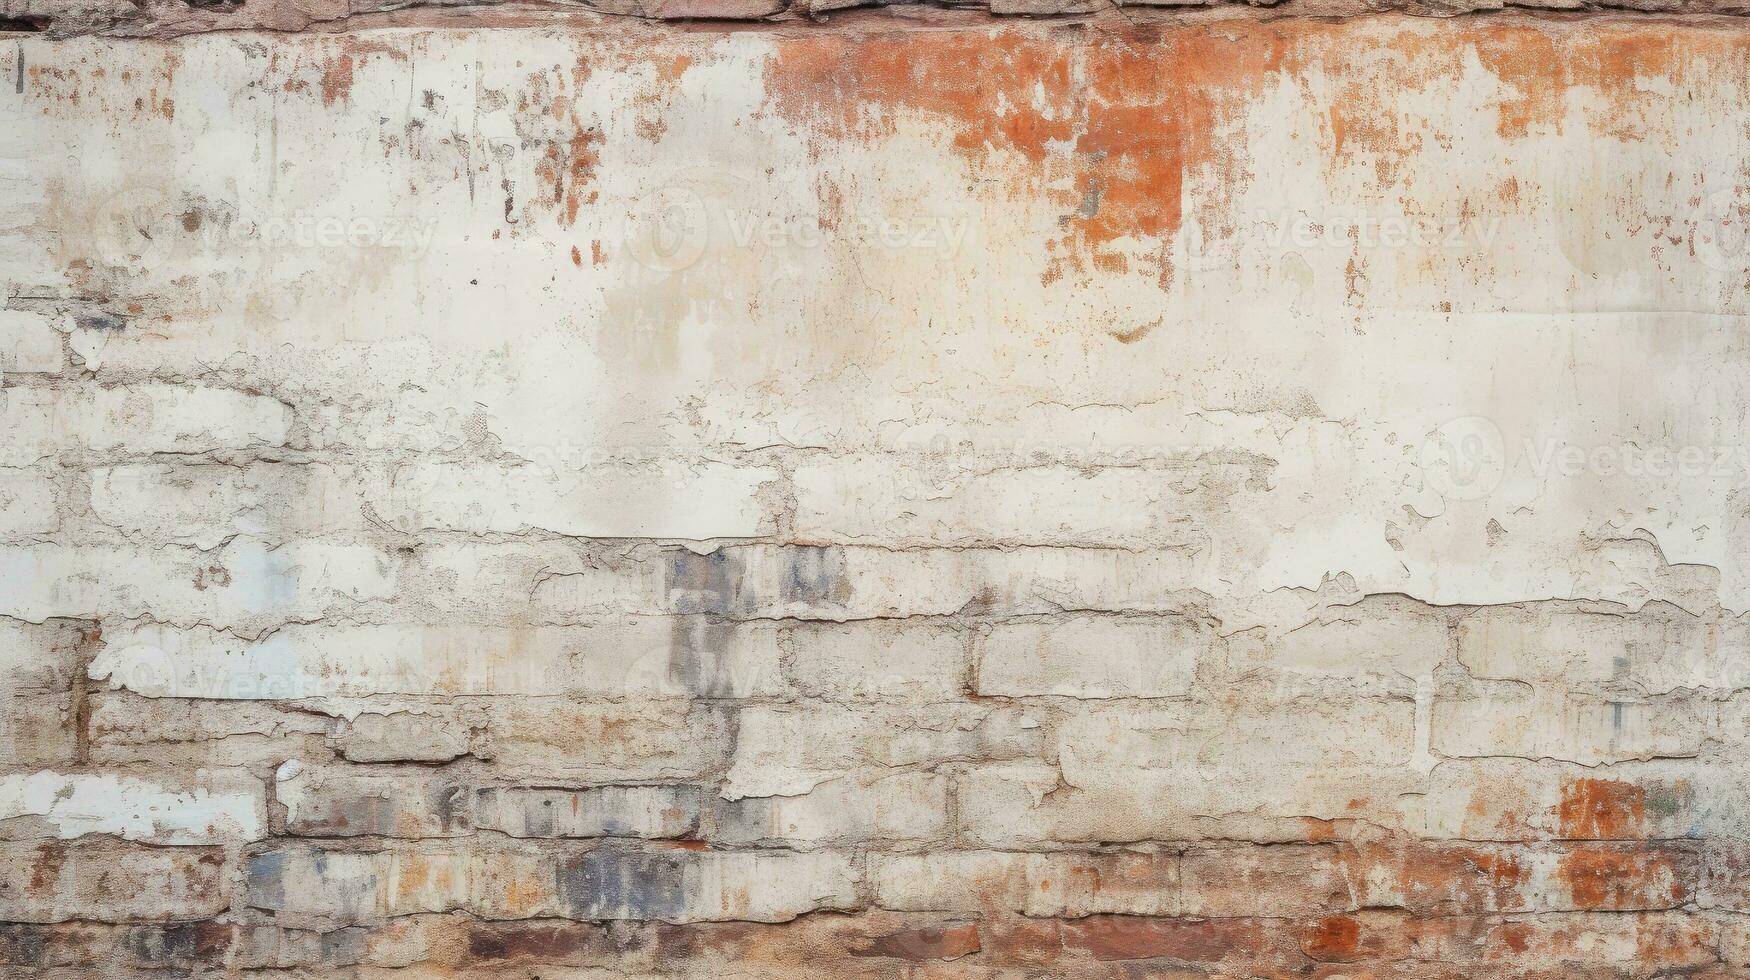 oud rood steen muur achtergrond, abstract structuur patroon achtergrond, generatief ai illustratie foto